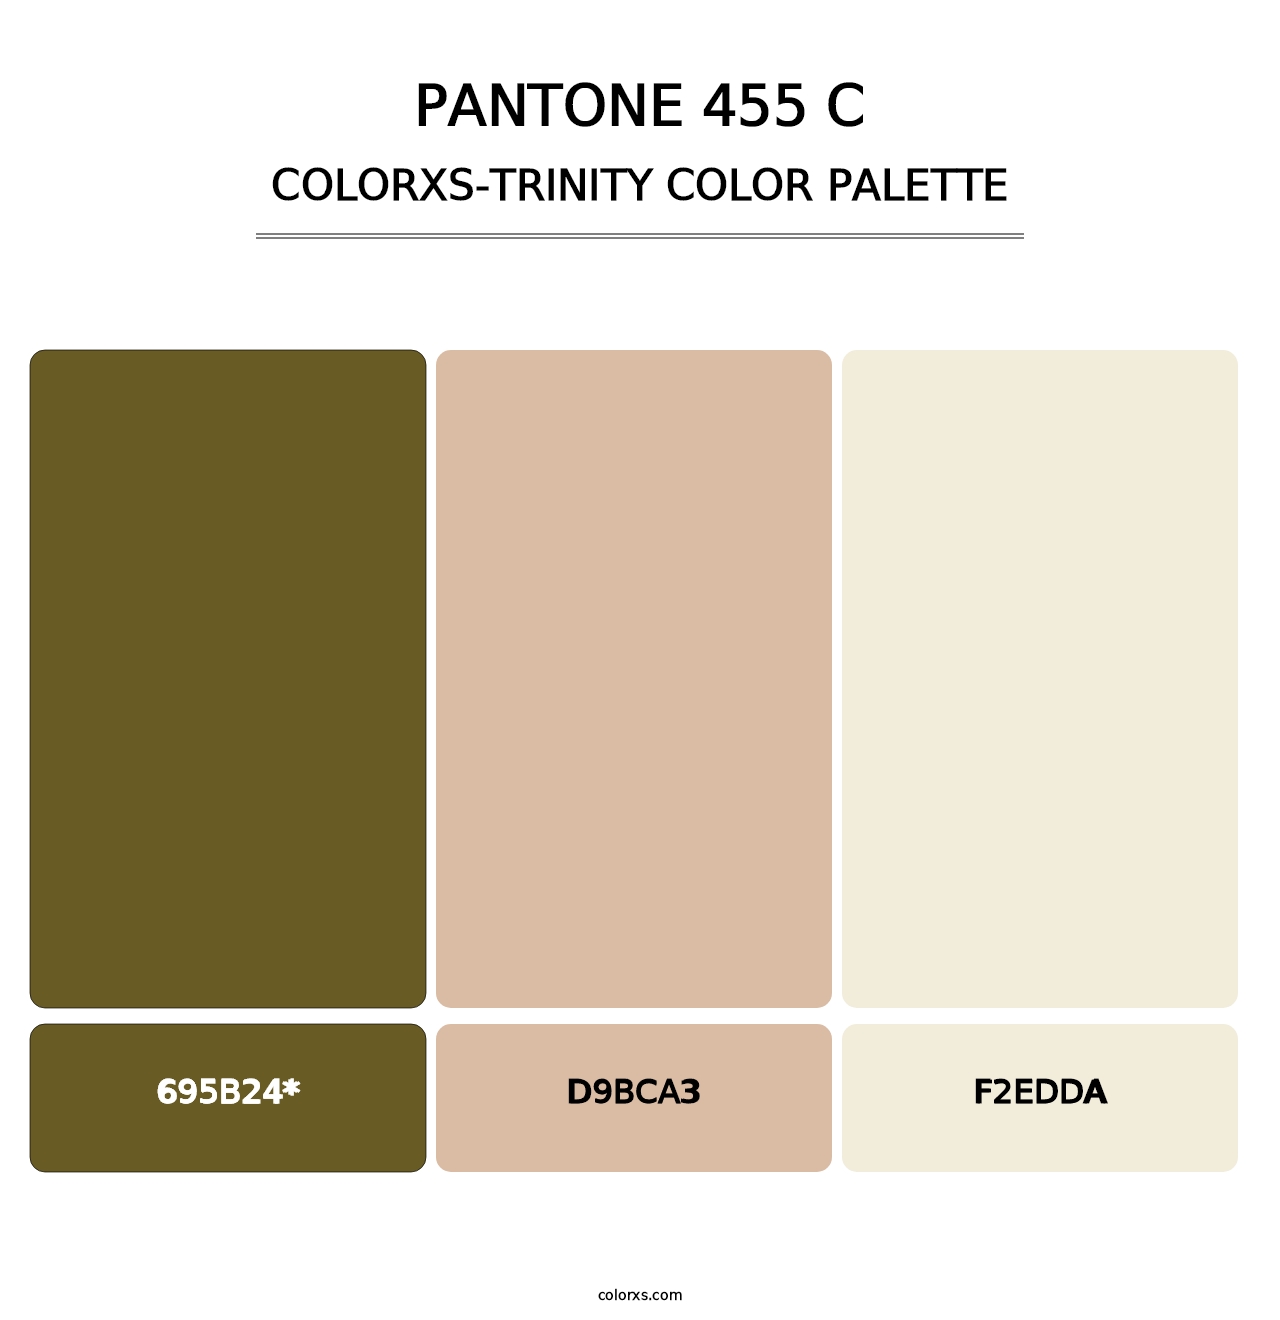 PANTONE 455 C - Colorxs Trinity Palette